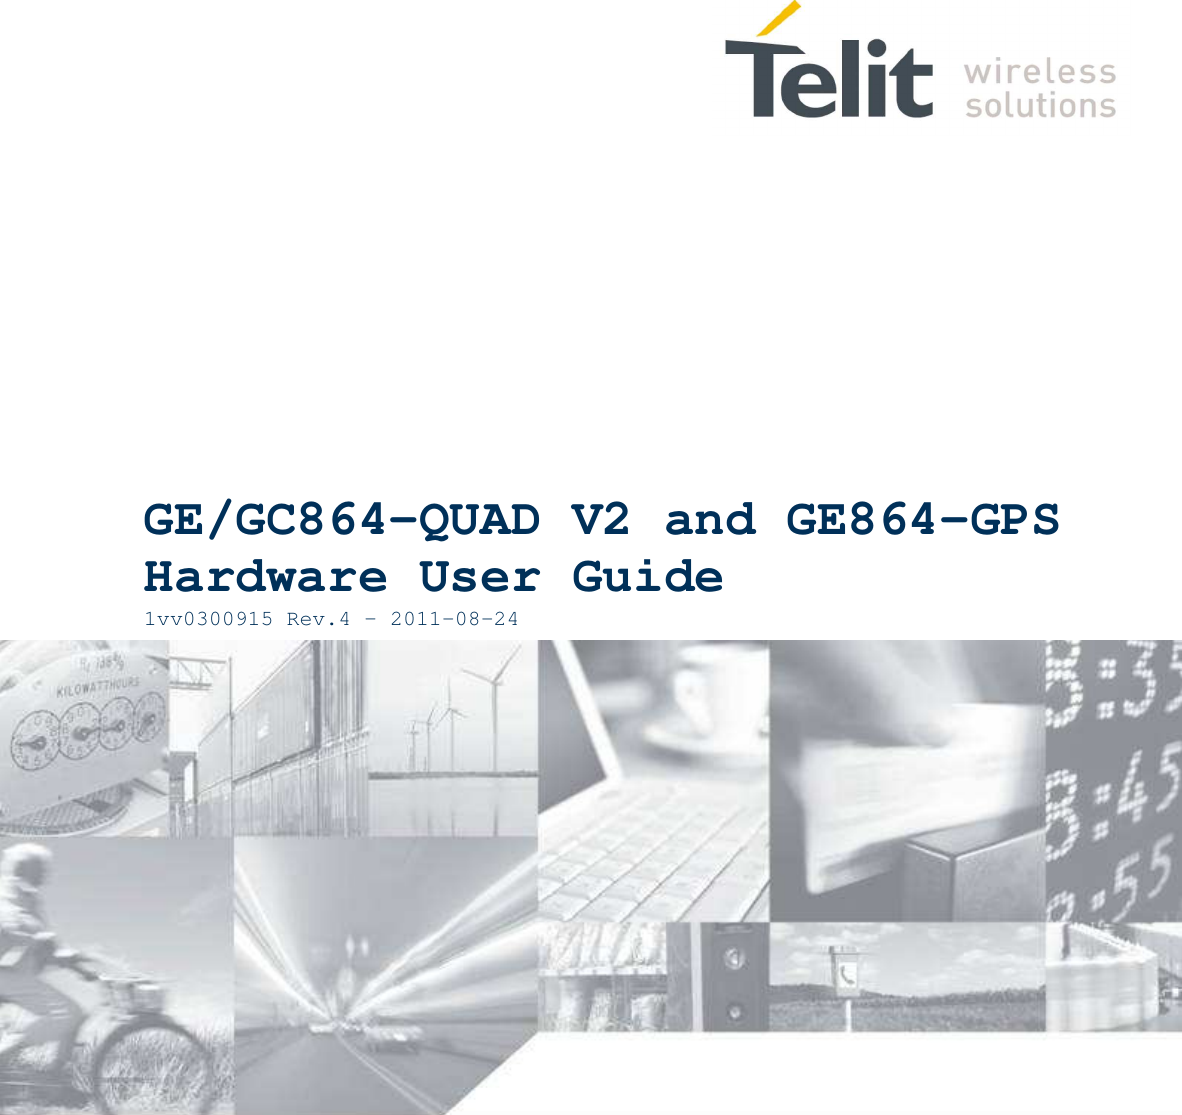                     GE/GC864-QUAD V2 and GE864-GPS Hardware User Guide 1vv0300915 Rev.4 – 2011-08-24 